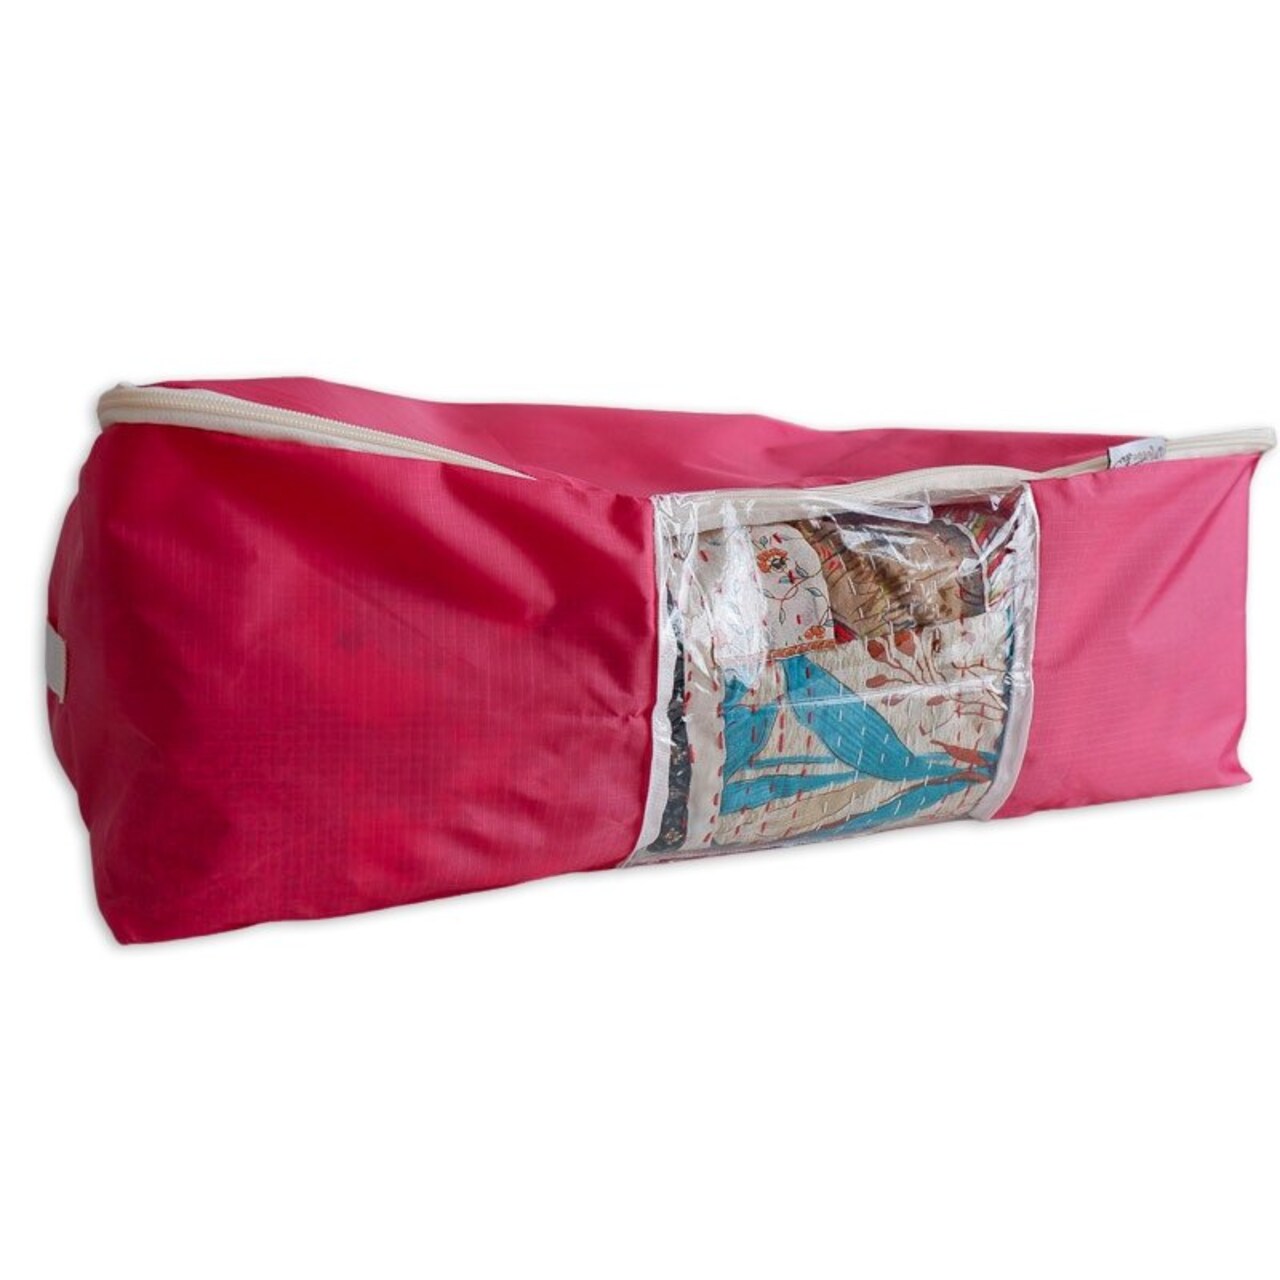 Quilt Storage Bag - Lightweight & Breathable - 22X15X8